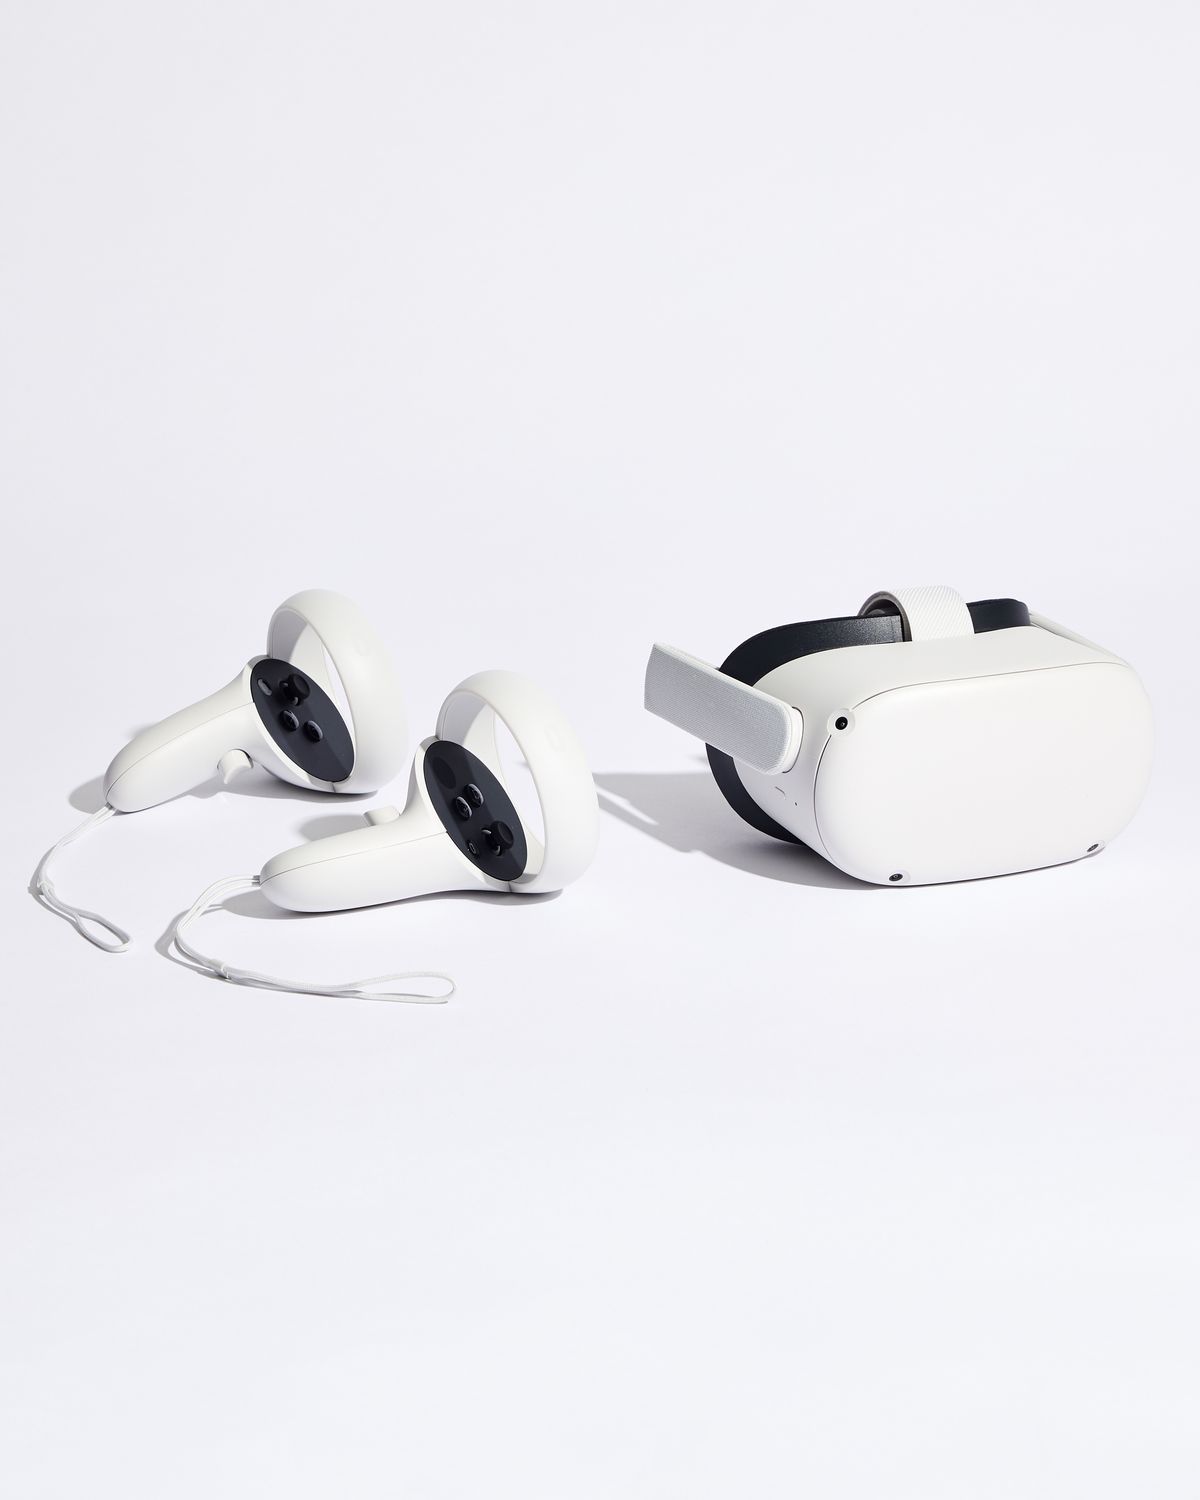 oculus quest 2 vr headset